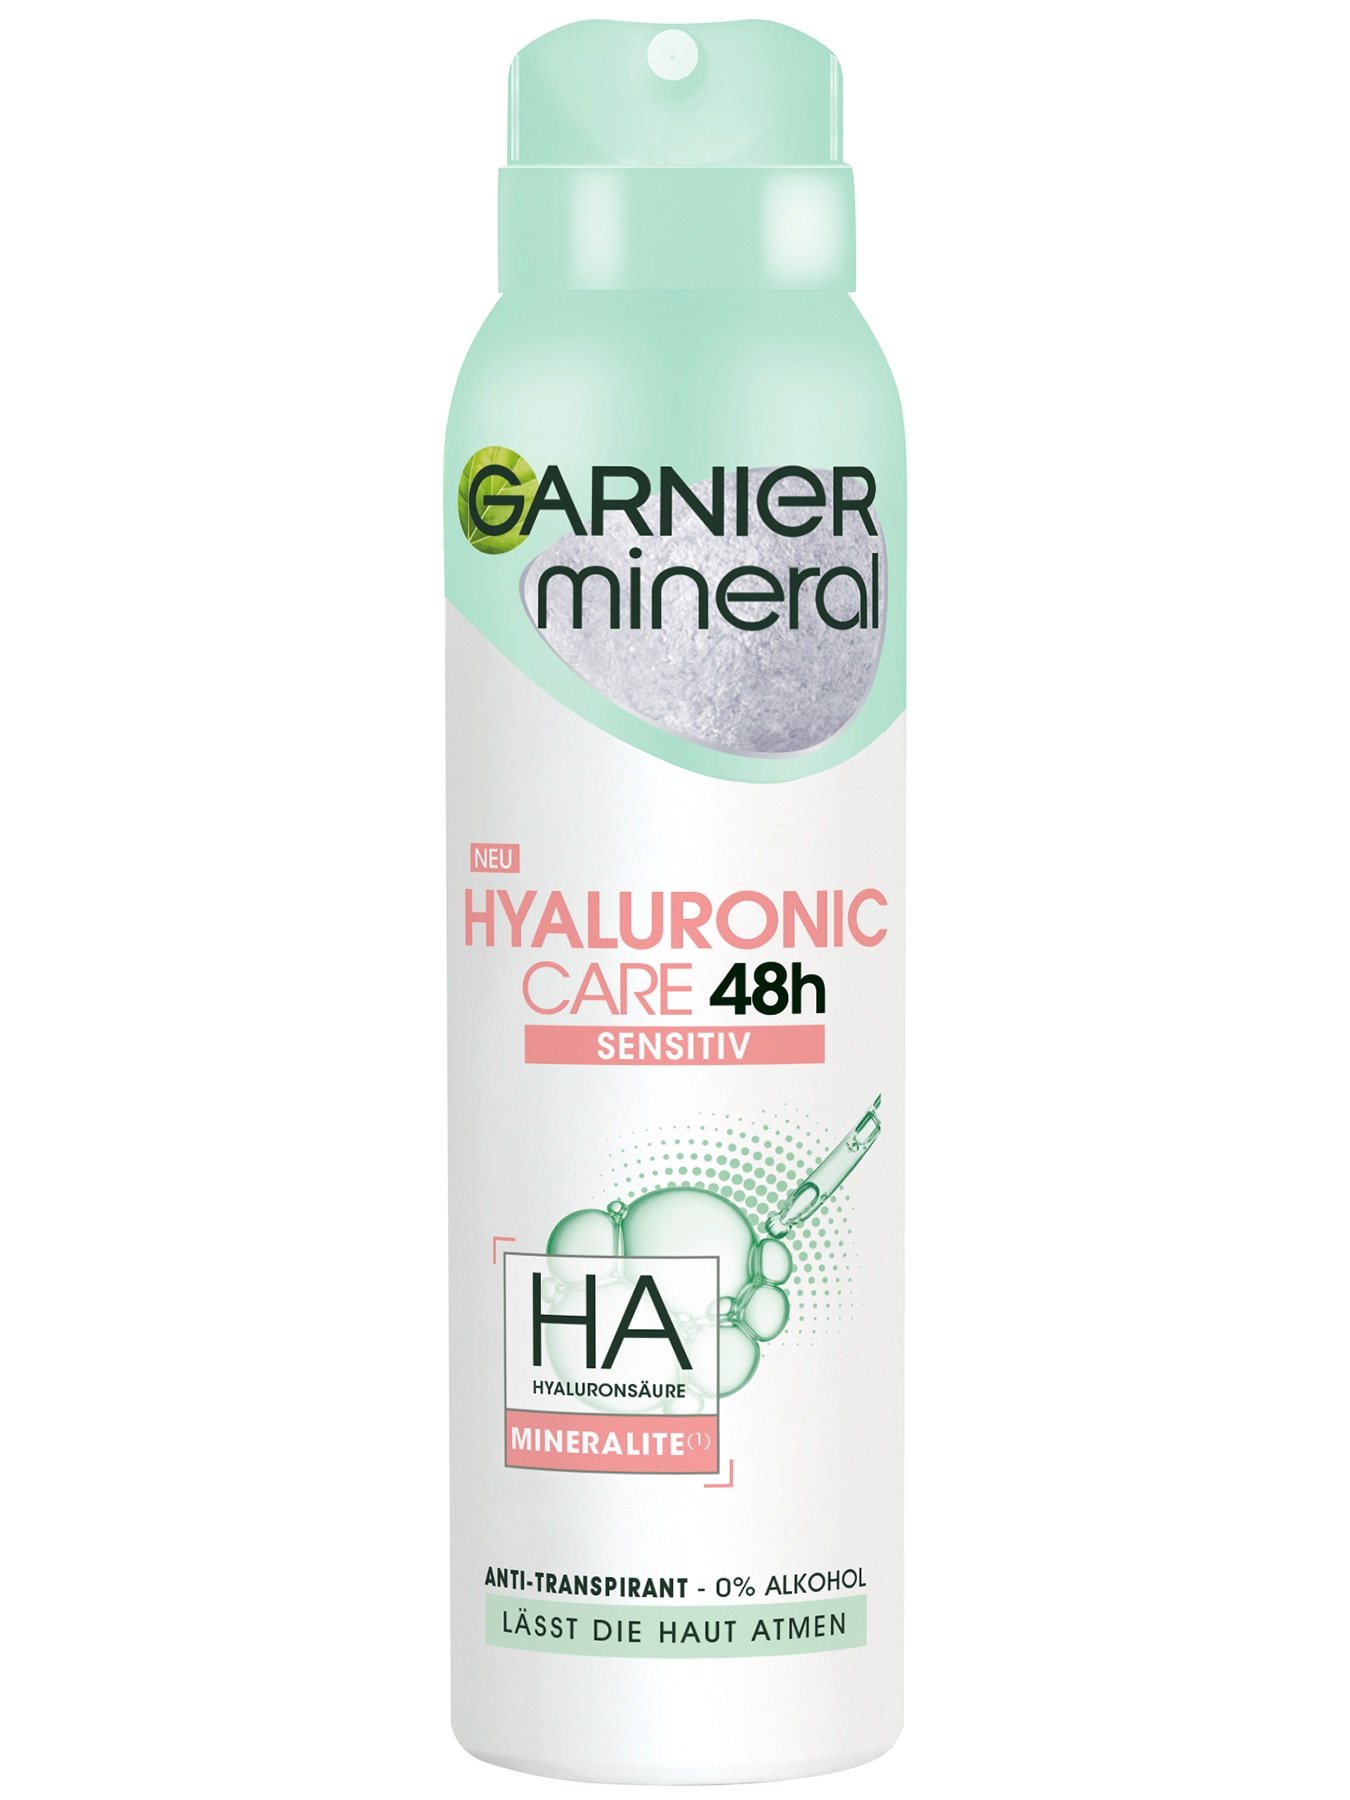 Garnier Mineral Hyaluronic Care Deodorant vorne